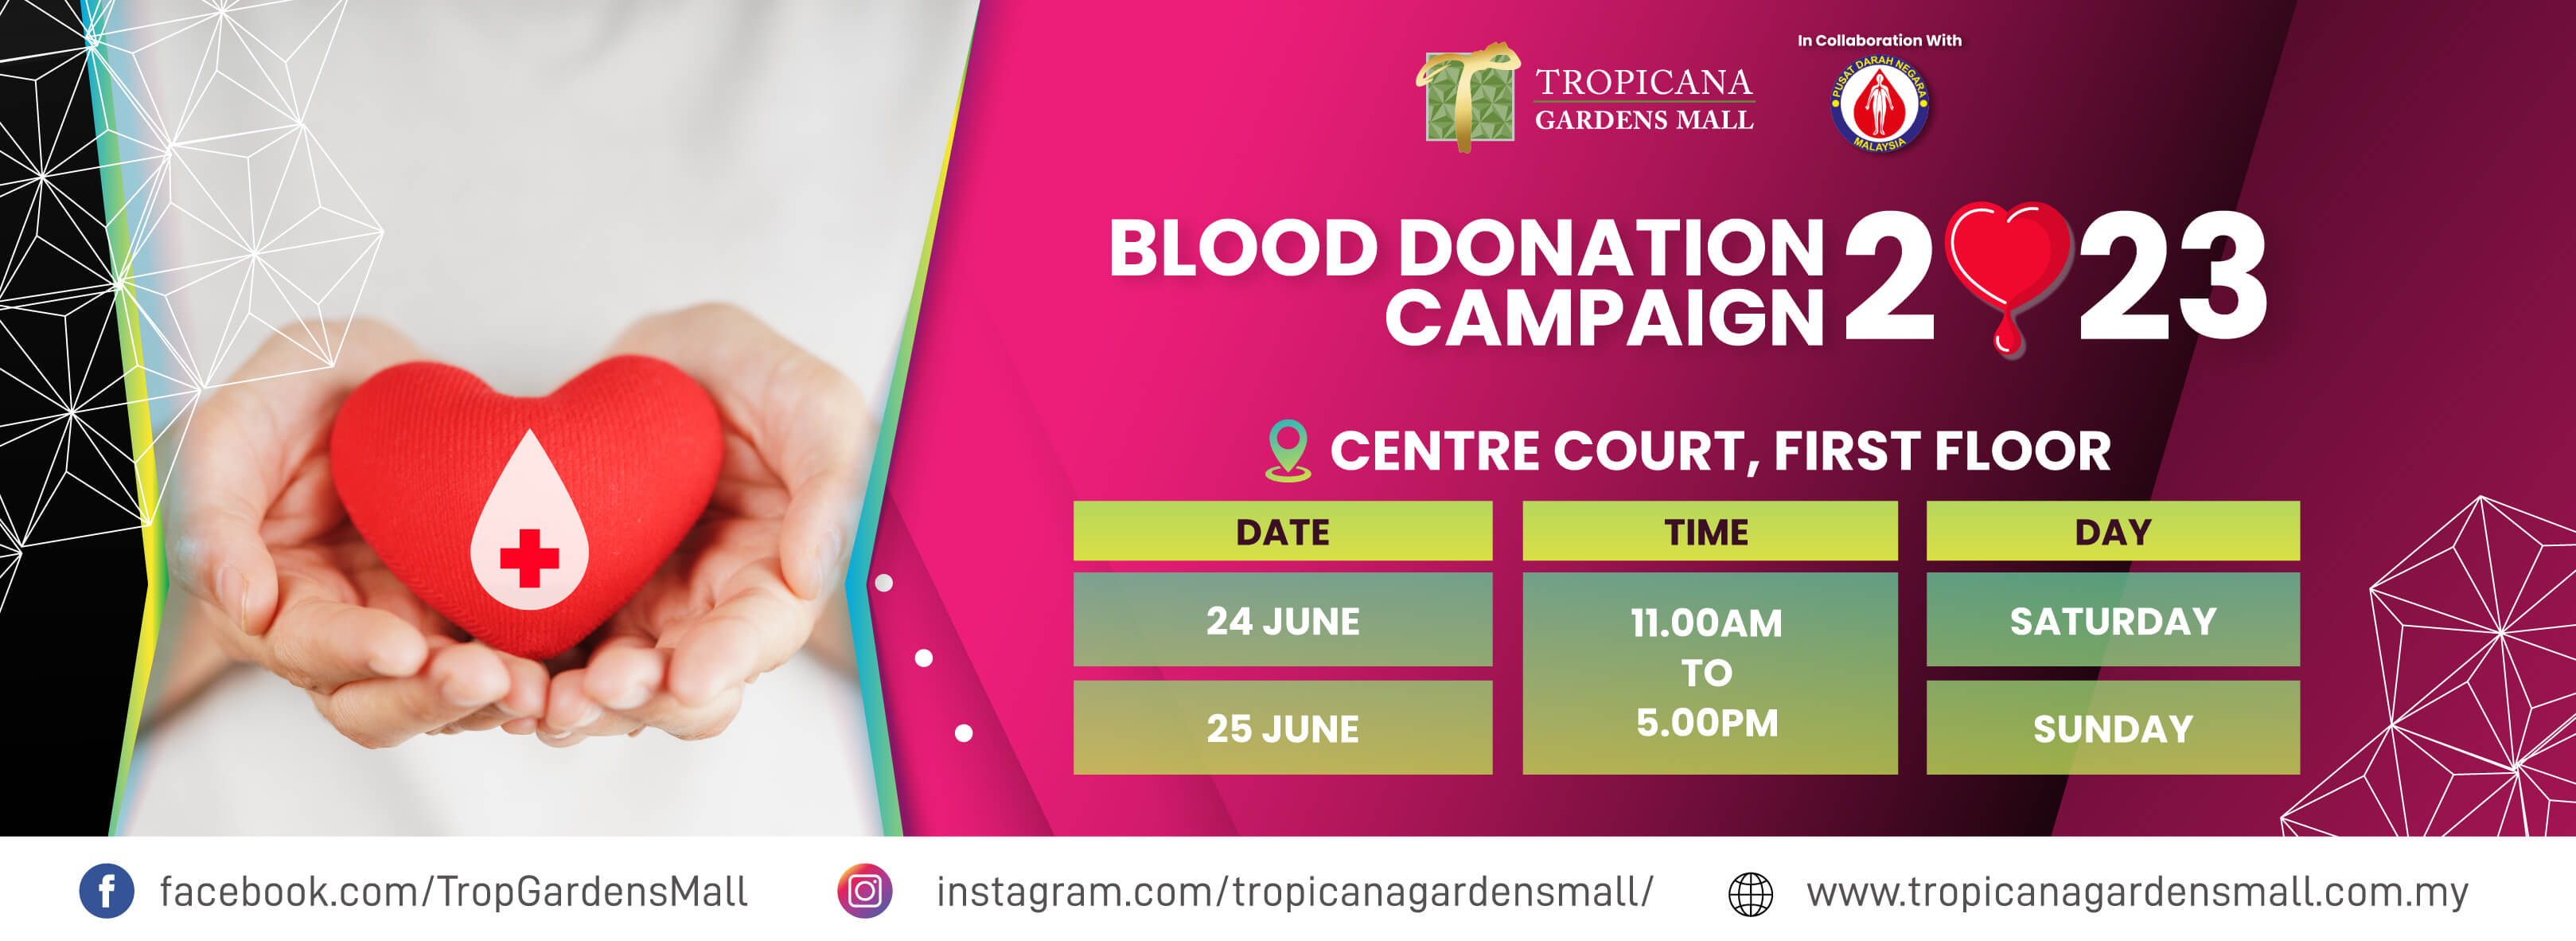 Tropicana Gardens Mall Blood Donation